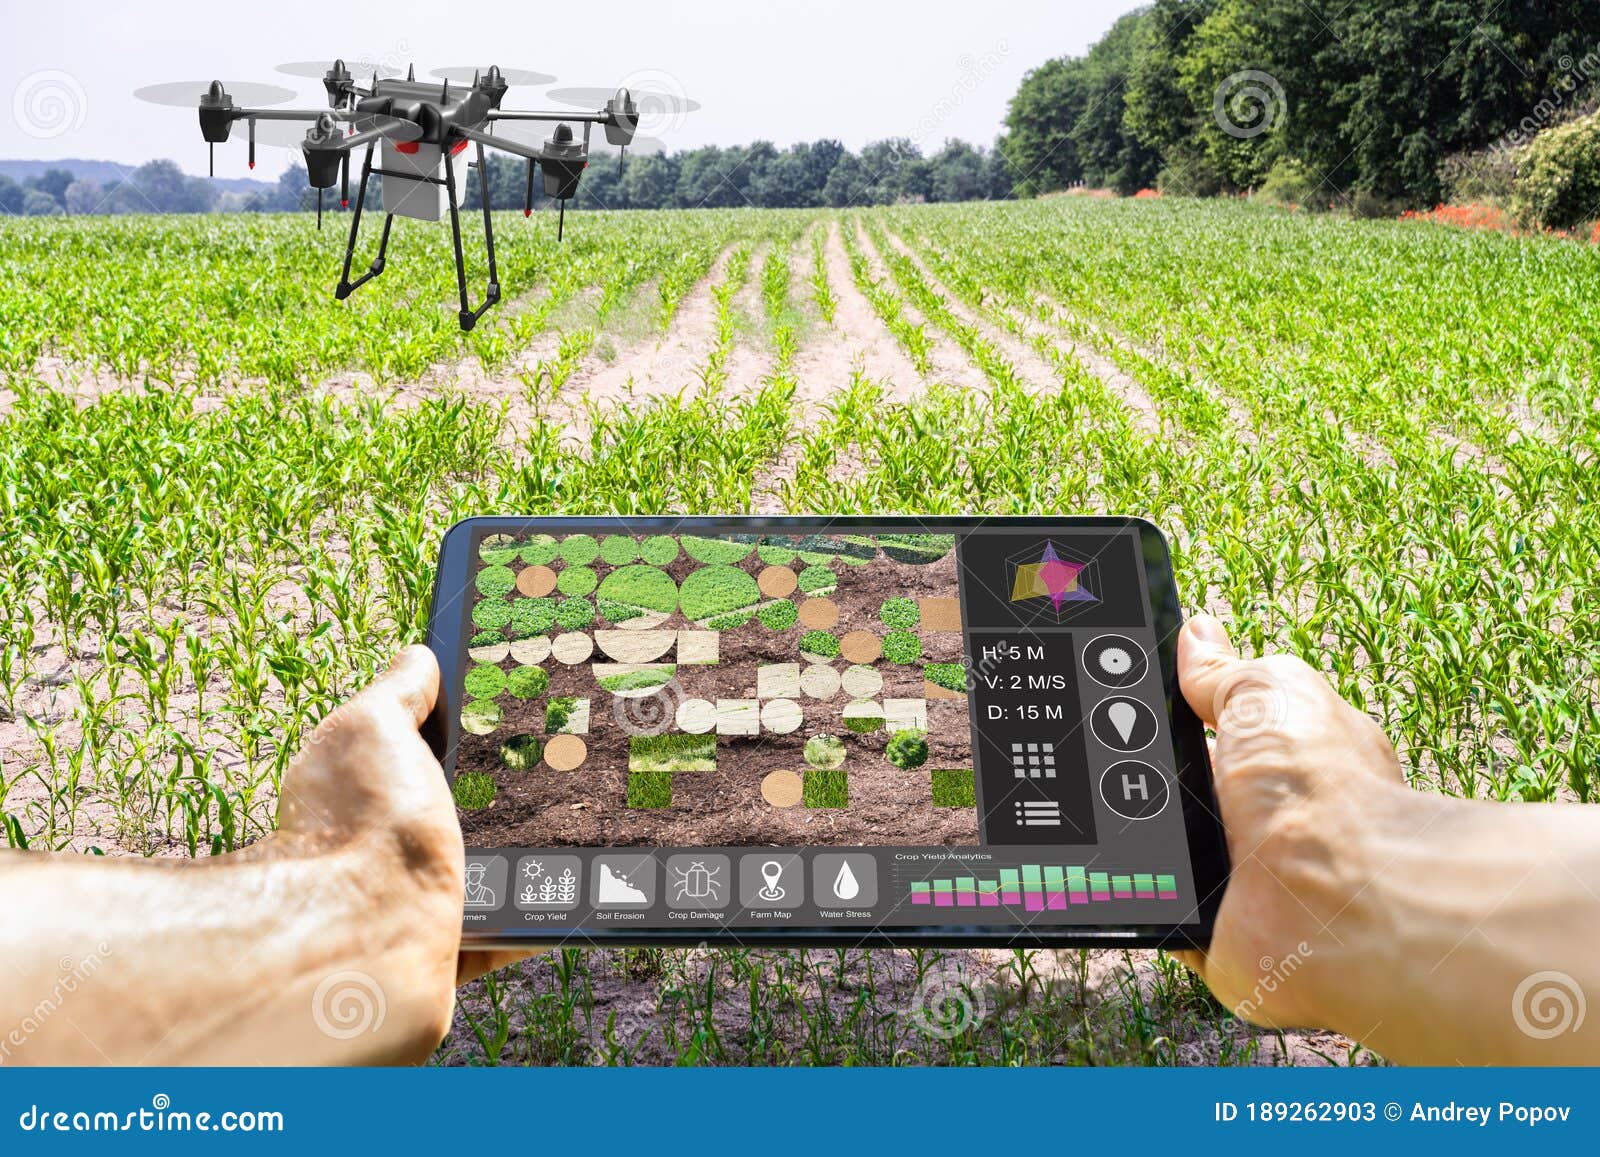 modern smart farming agriculture technology at farm